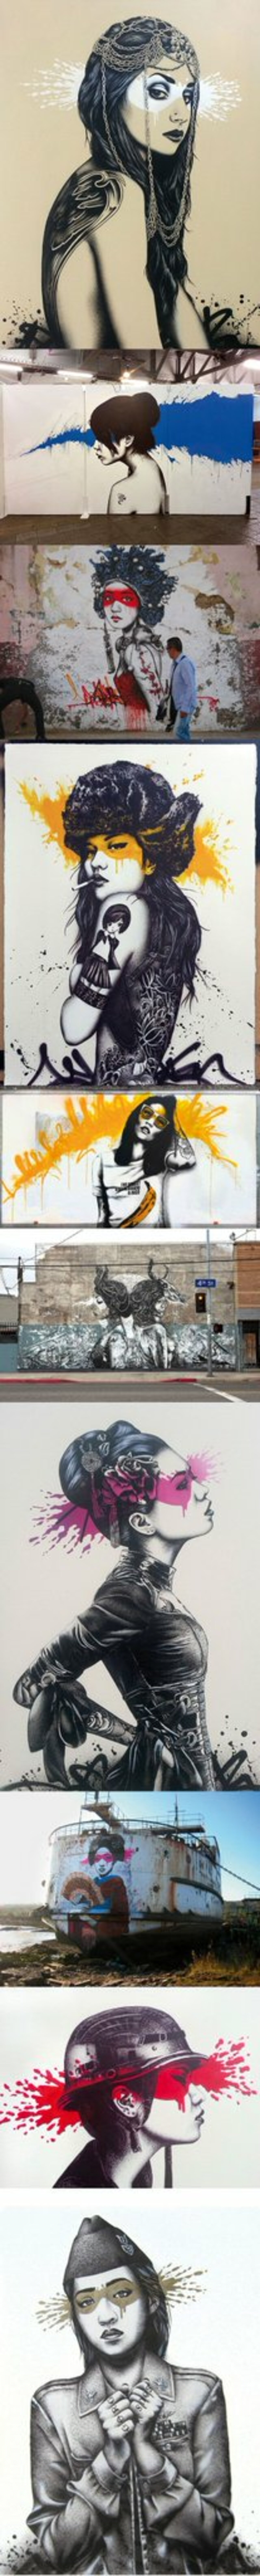 More Fin DAC Murals#streetart #mural #graffiti #art https://t.co/kIEhJ7iZCU